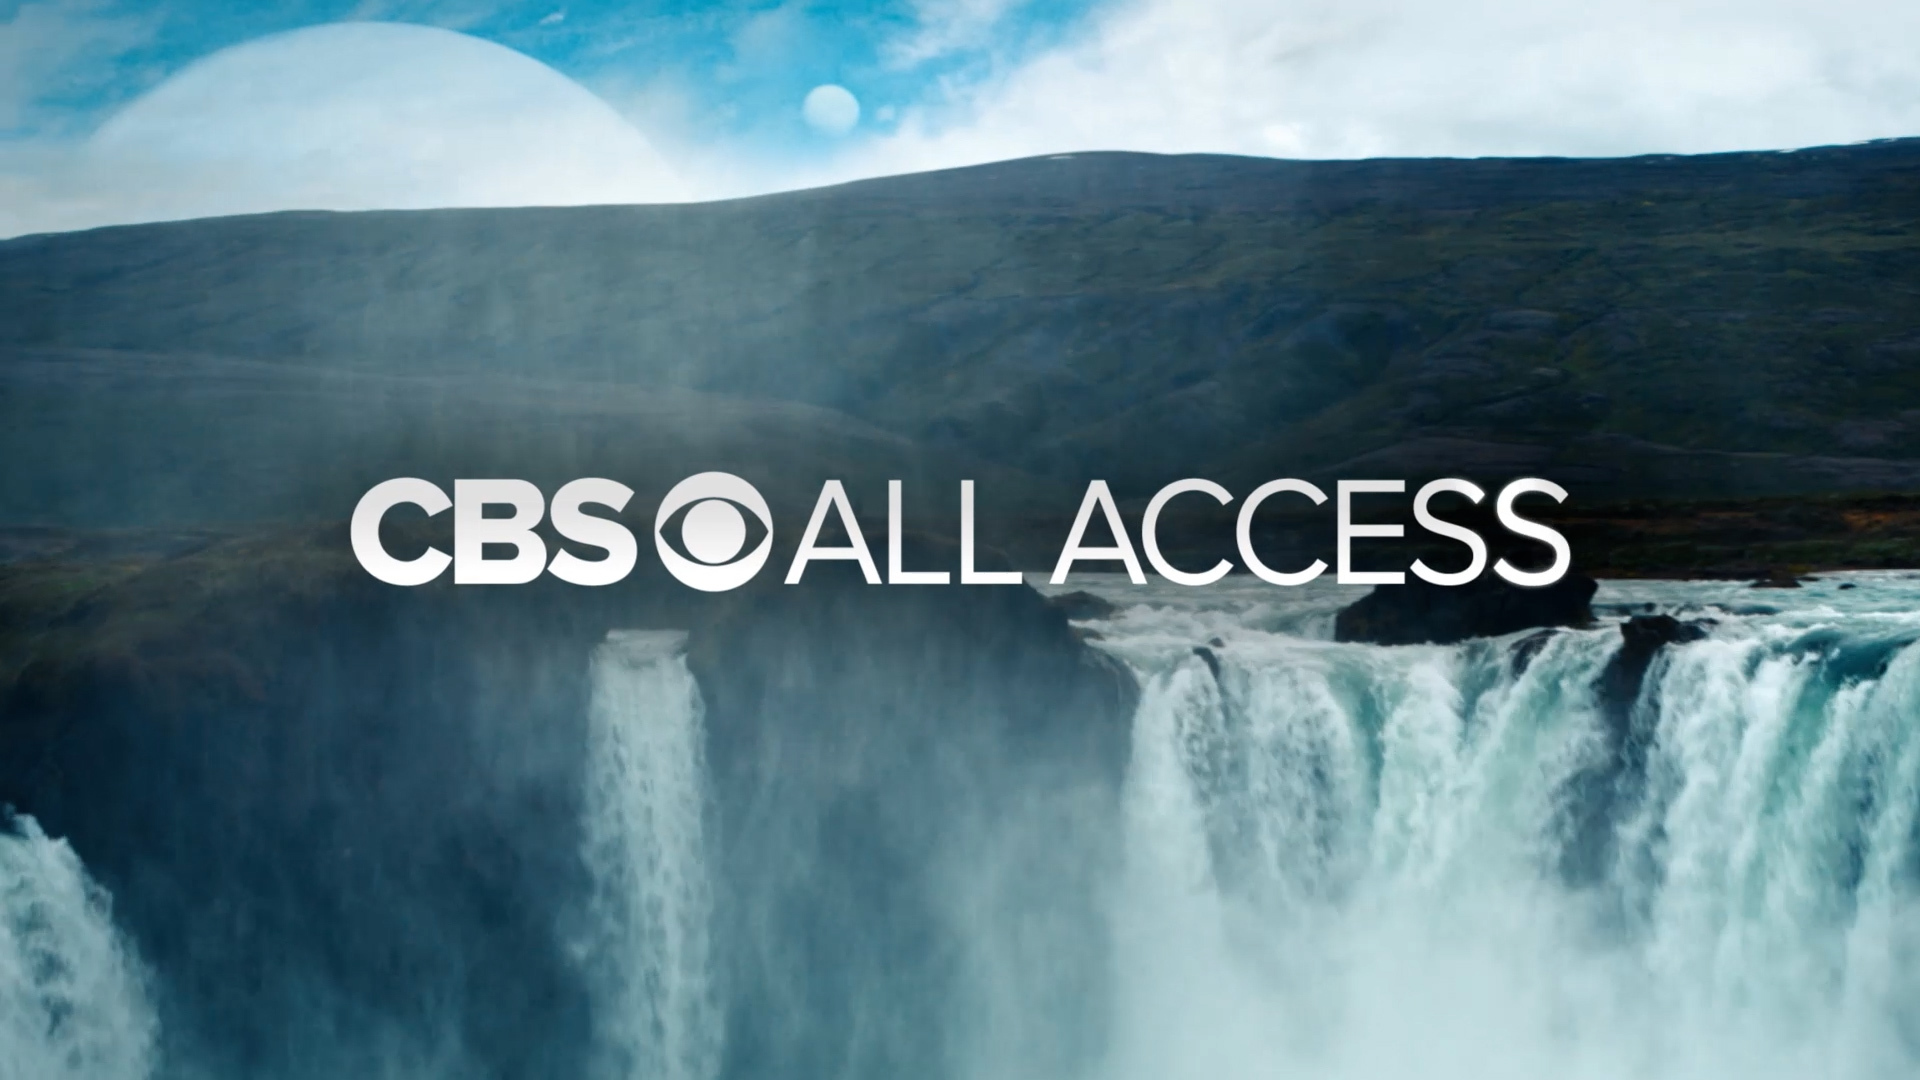 Access living. CBS all access.